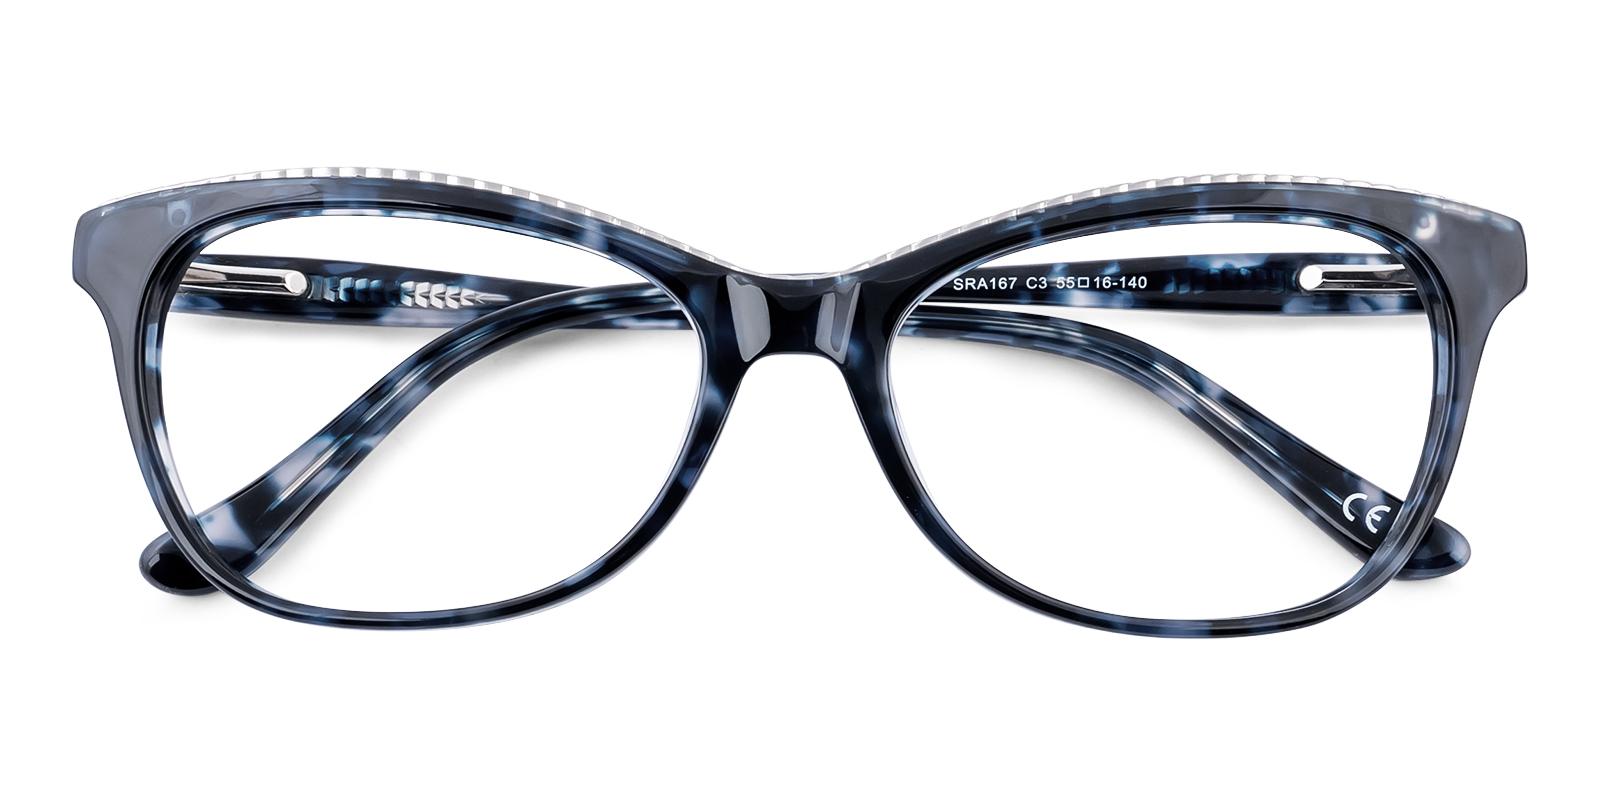 Getness Pattern Acetate Eyeglasses , SpringHinges , UniversalBridgeFit Frames from ABBE Glasses